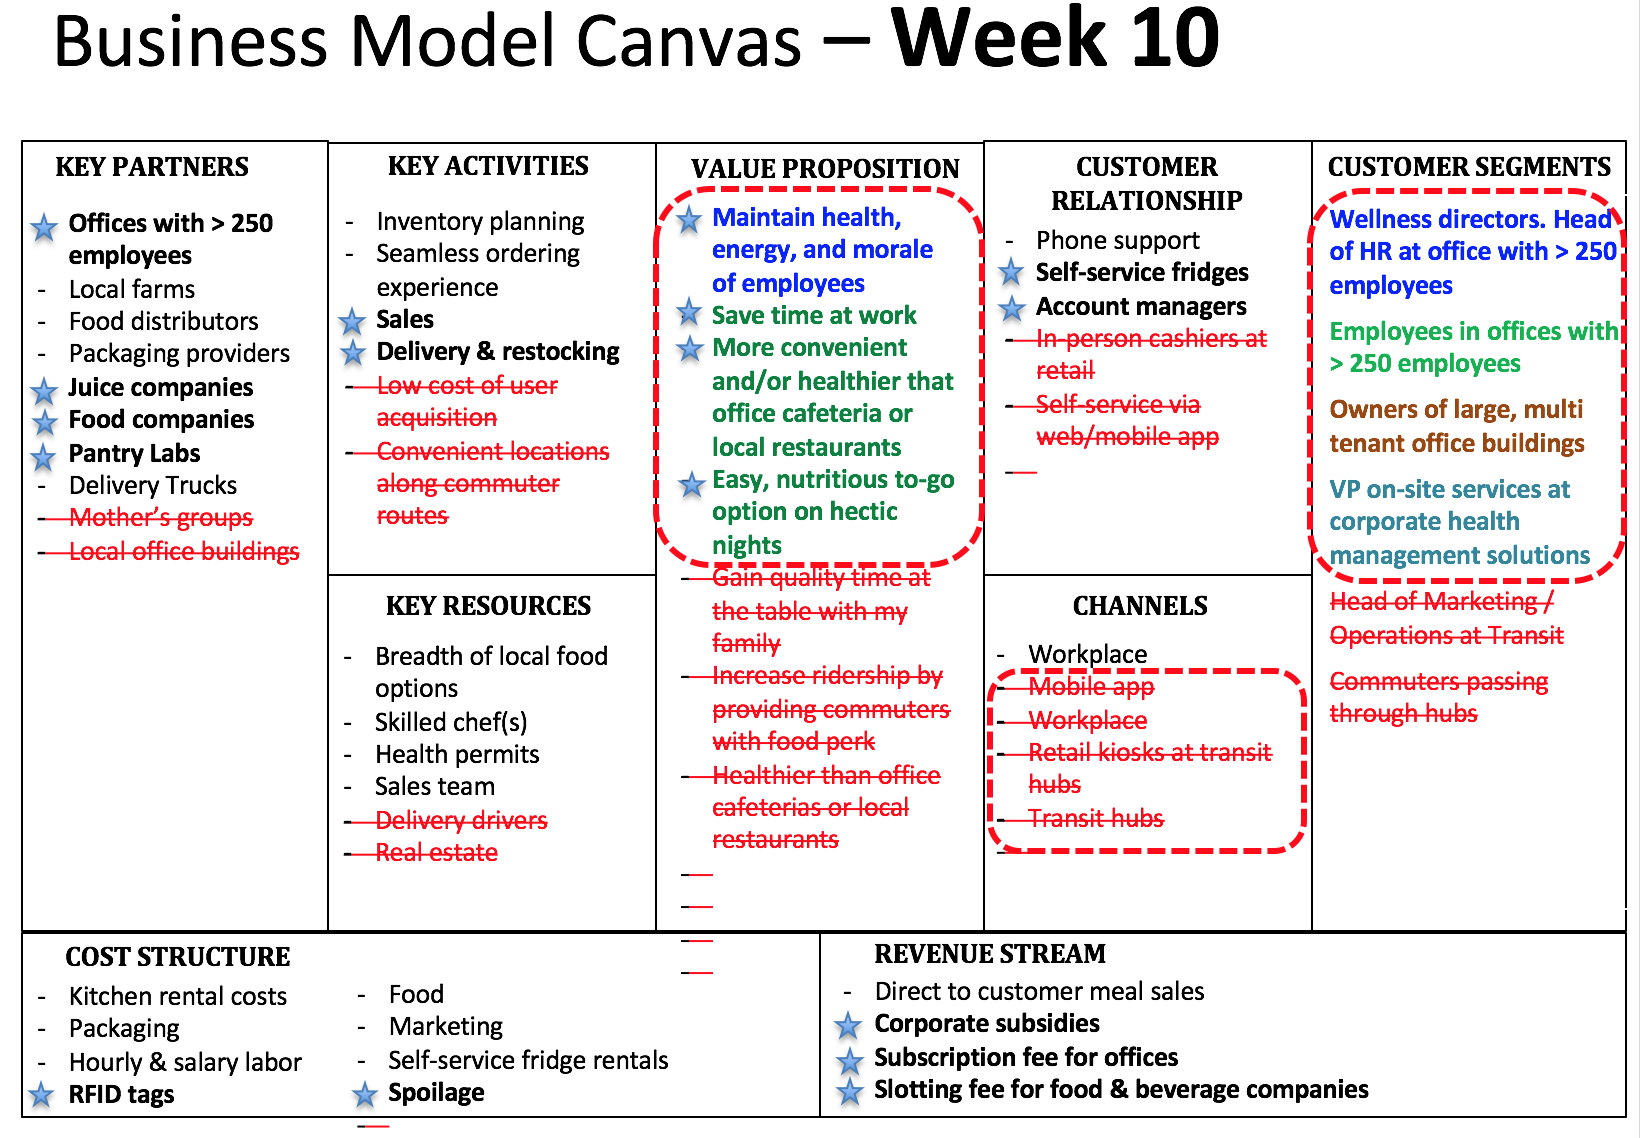 usiness model canvas week 10